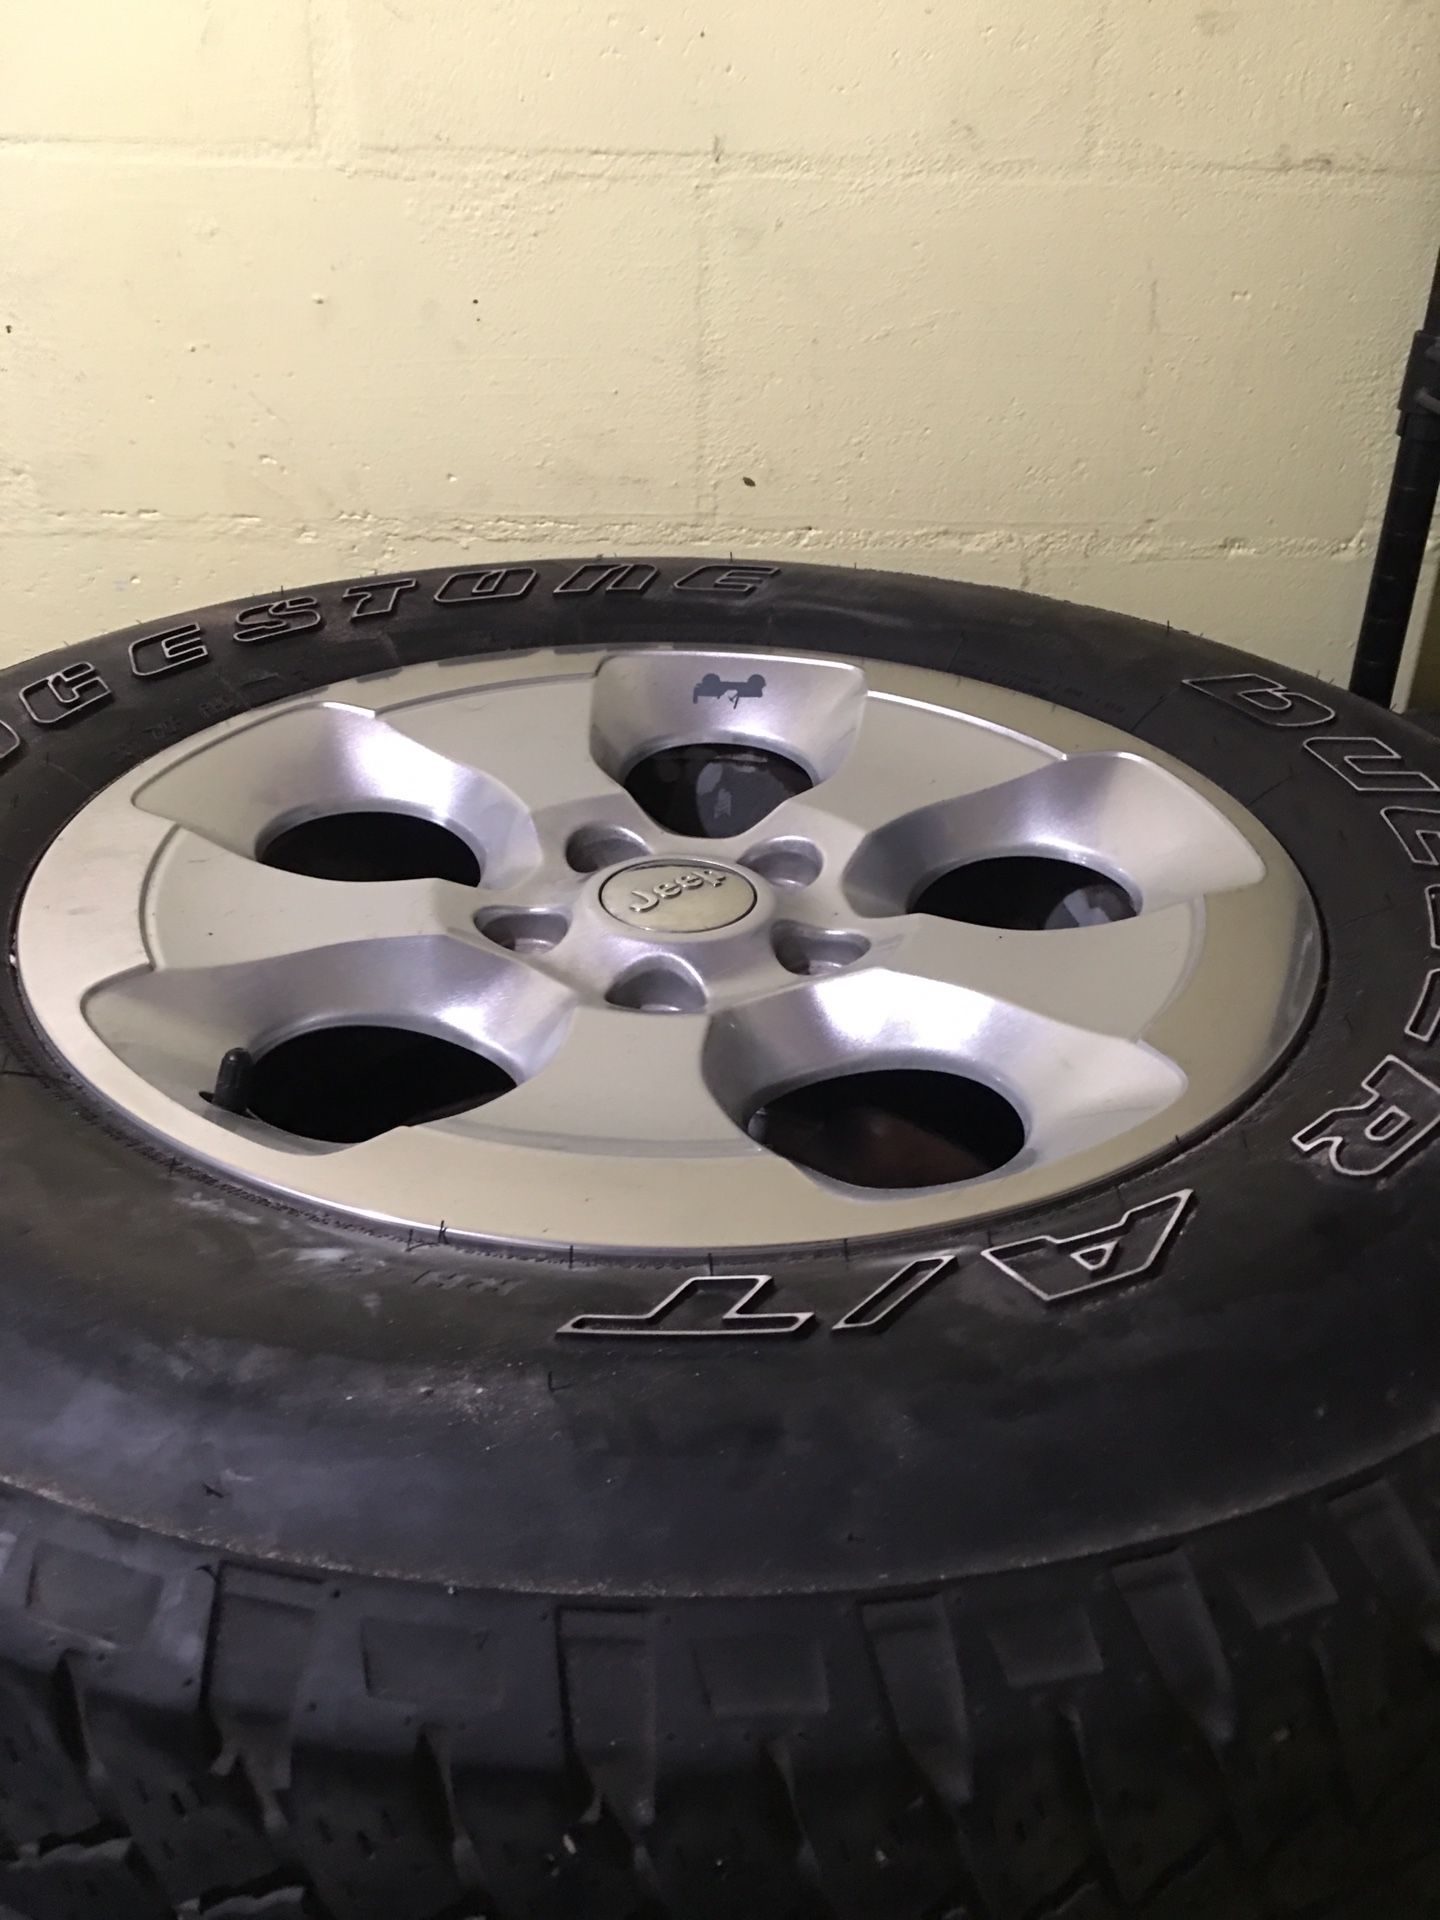 Jeep Wrangler Sahara wheels with Tires $400:00